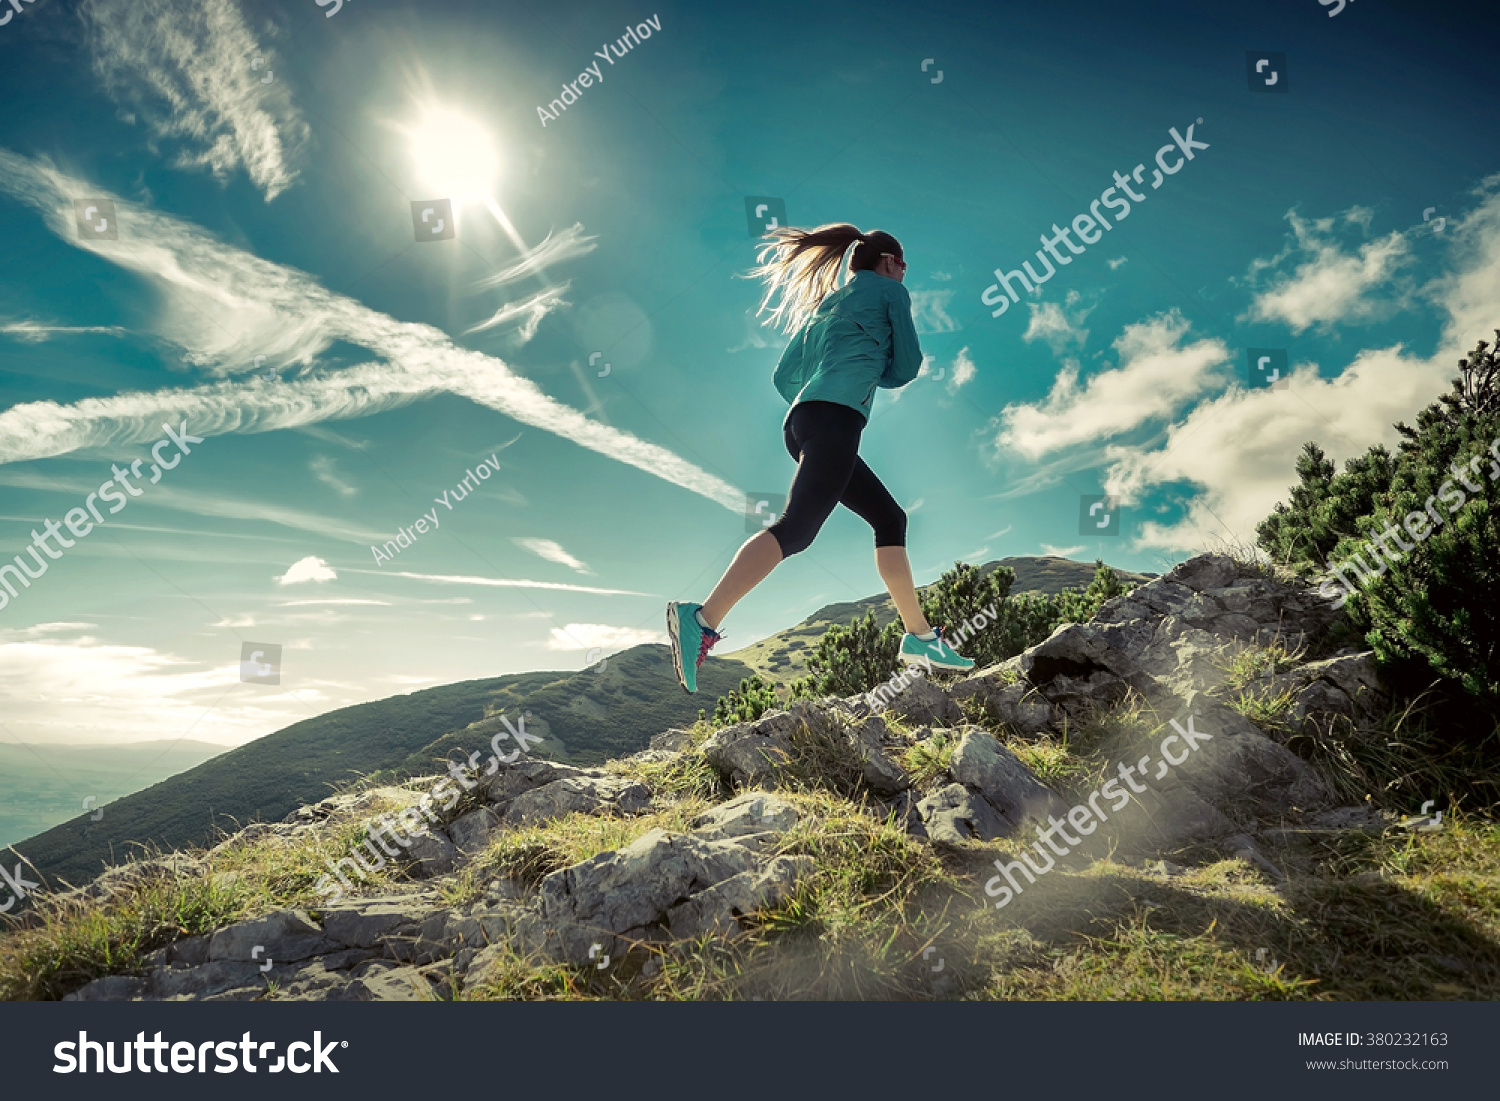 Female running in mountains under sunlight. #380232163